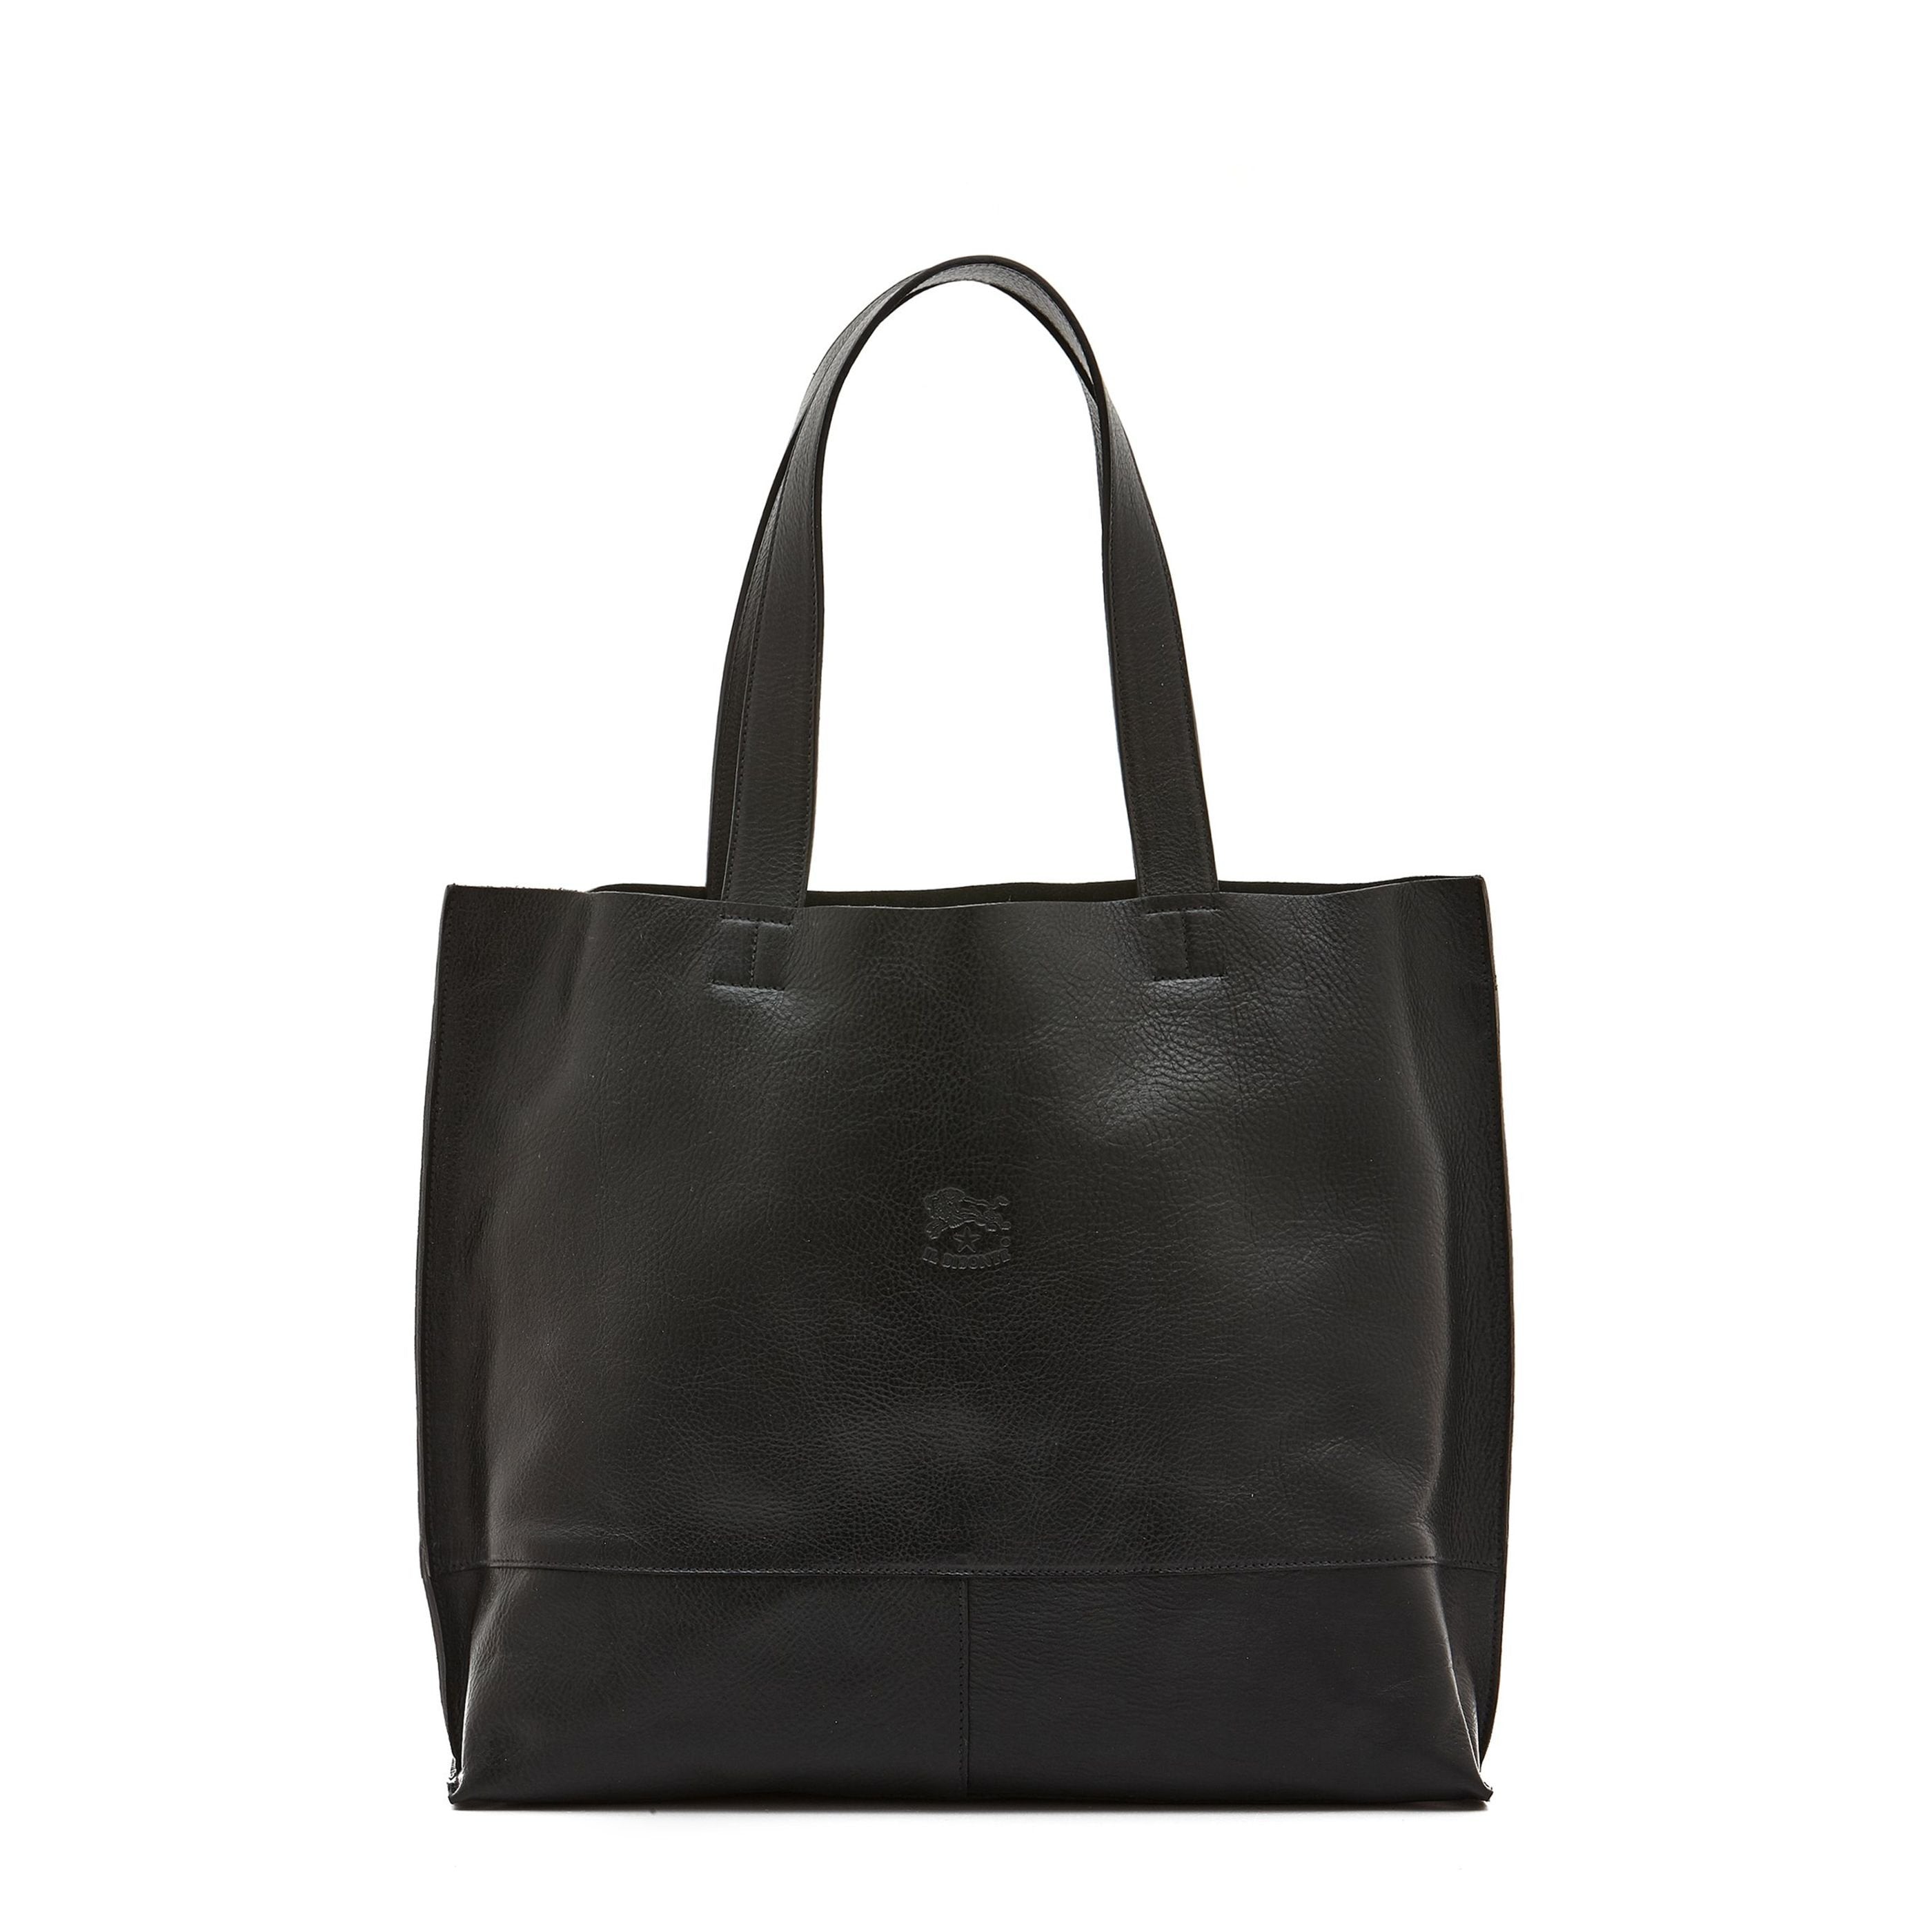 Talamone | Women's tote bag in leather color black – Il Bisonte